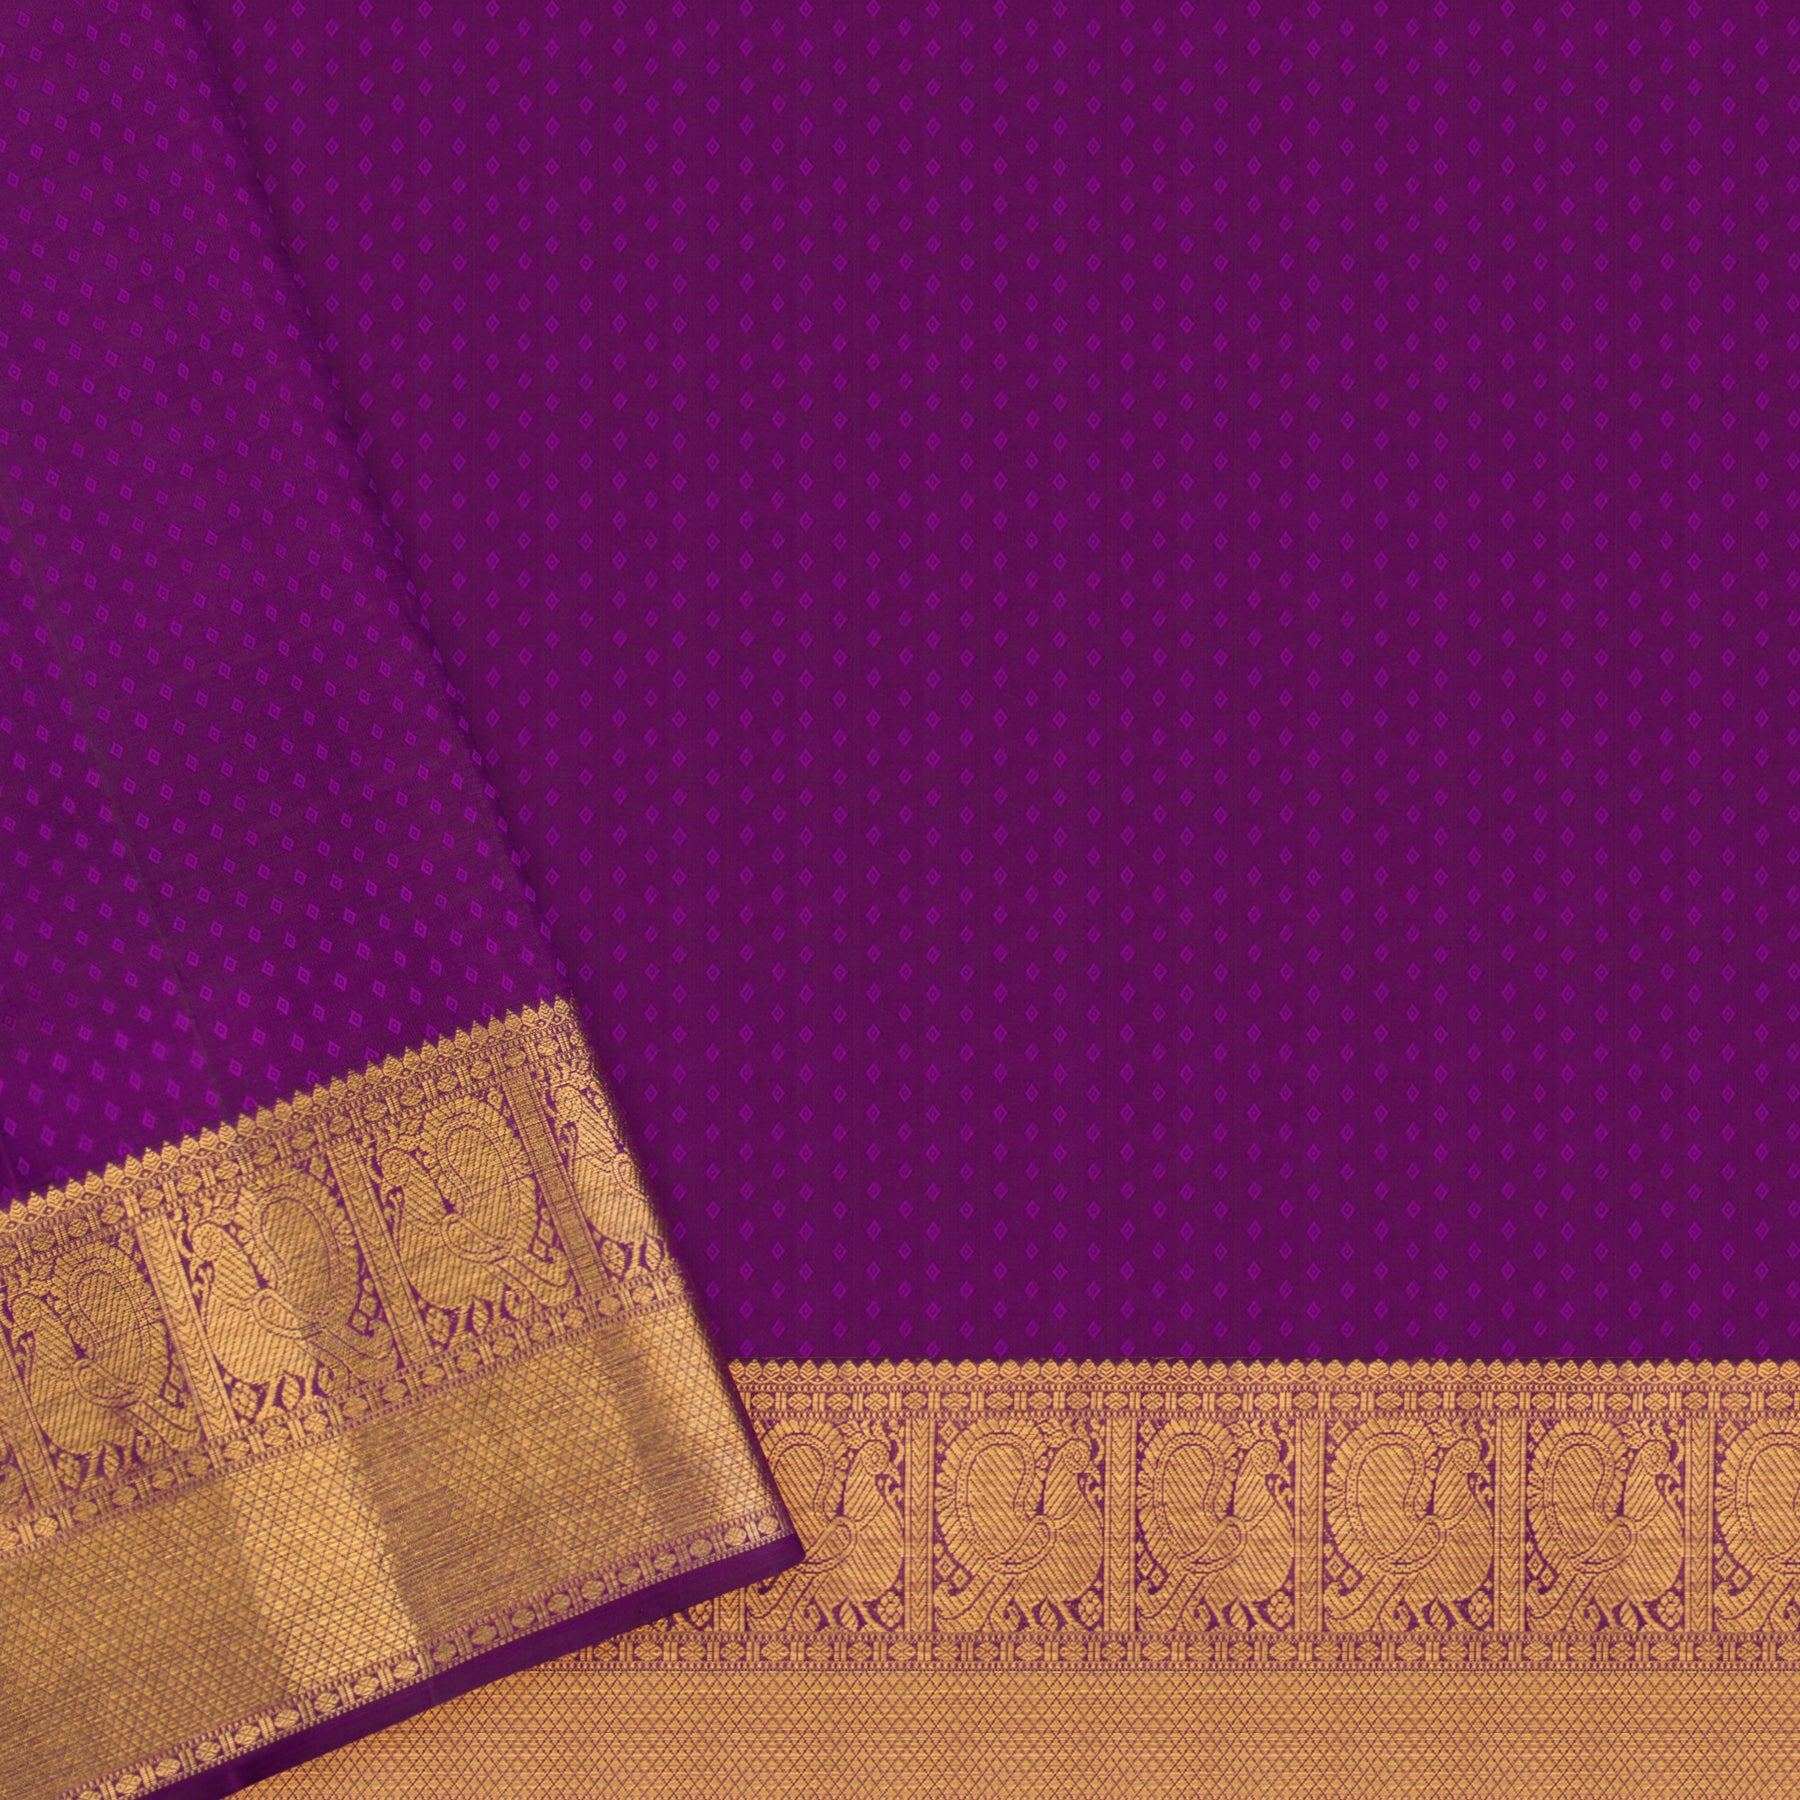 Kanakavalli Kanjivaram Silk Sari 22-110-HS001-11088 - Blouse View